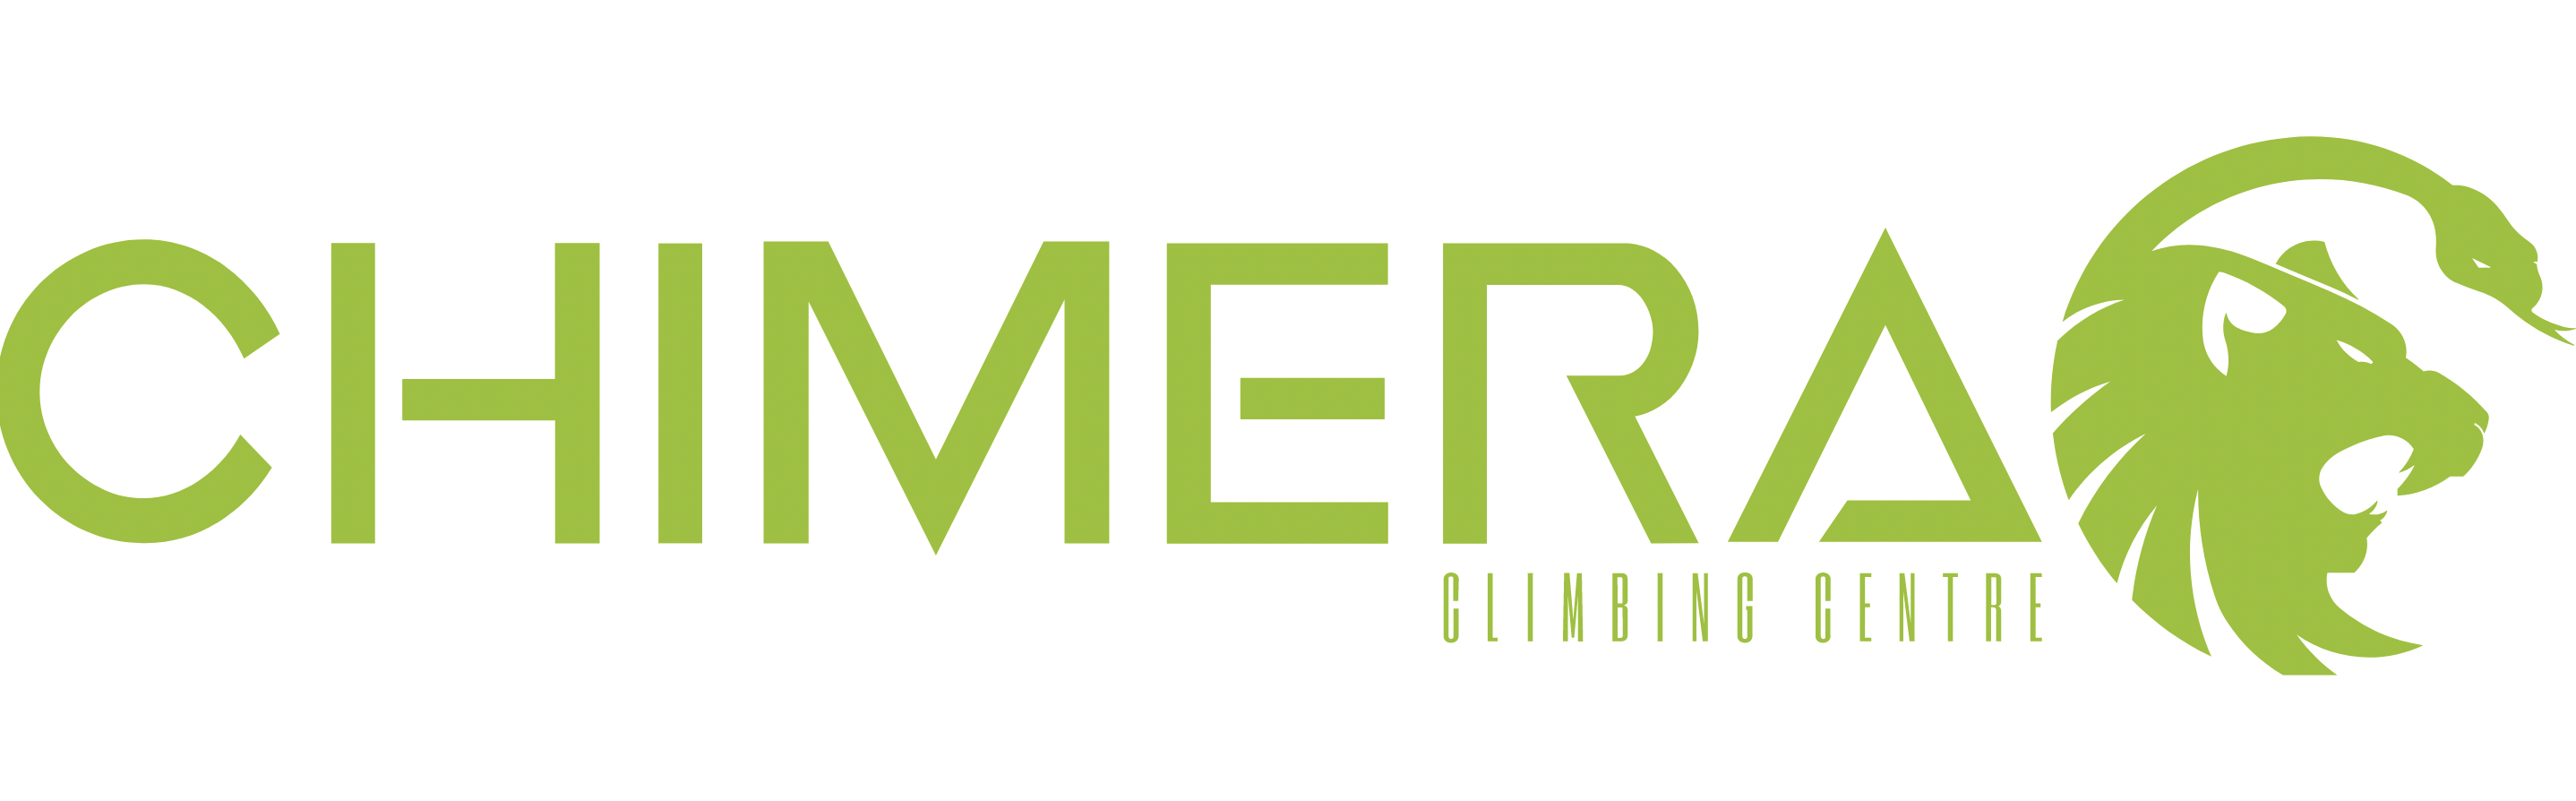 Member evening at Chimera logo